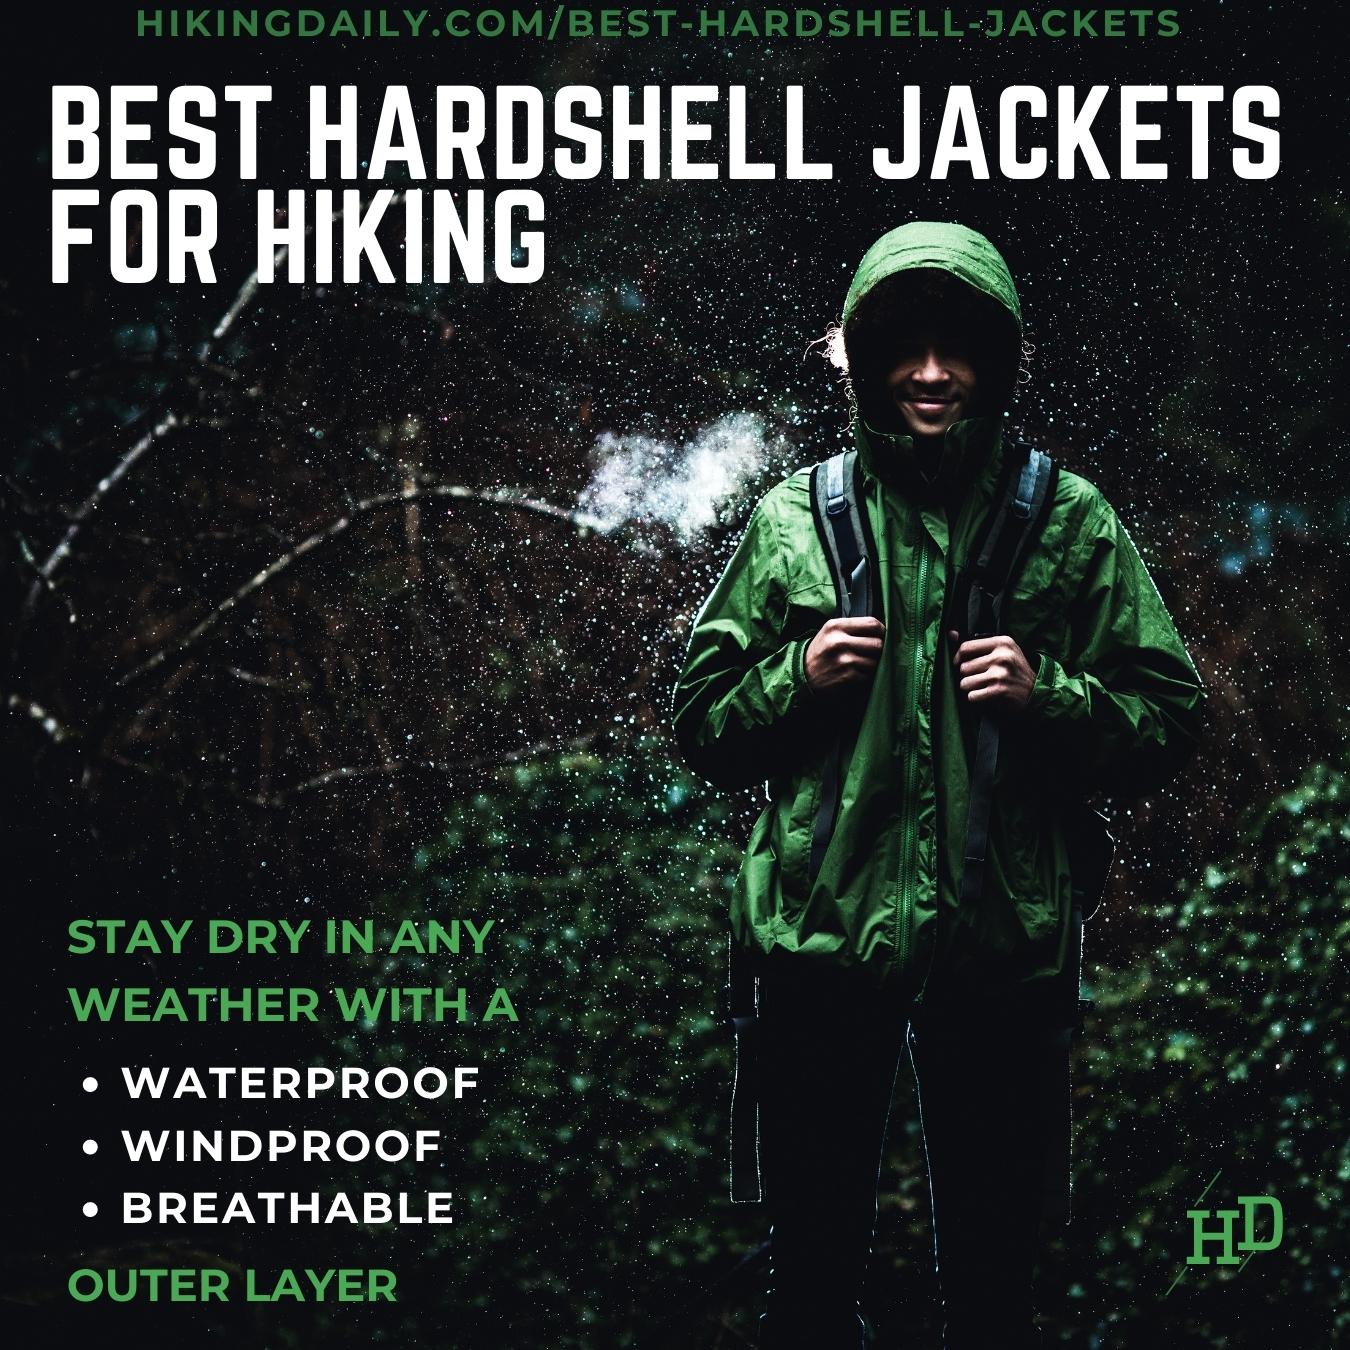 Best hardshell jackets for hiking